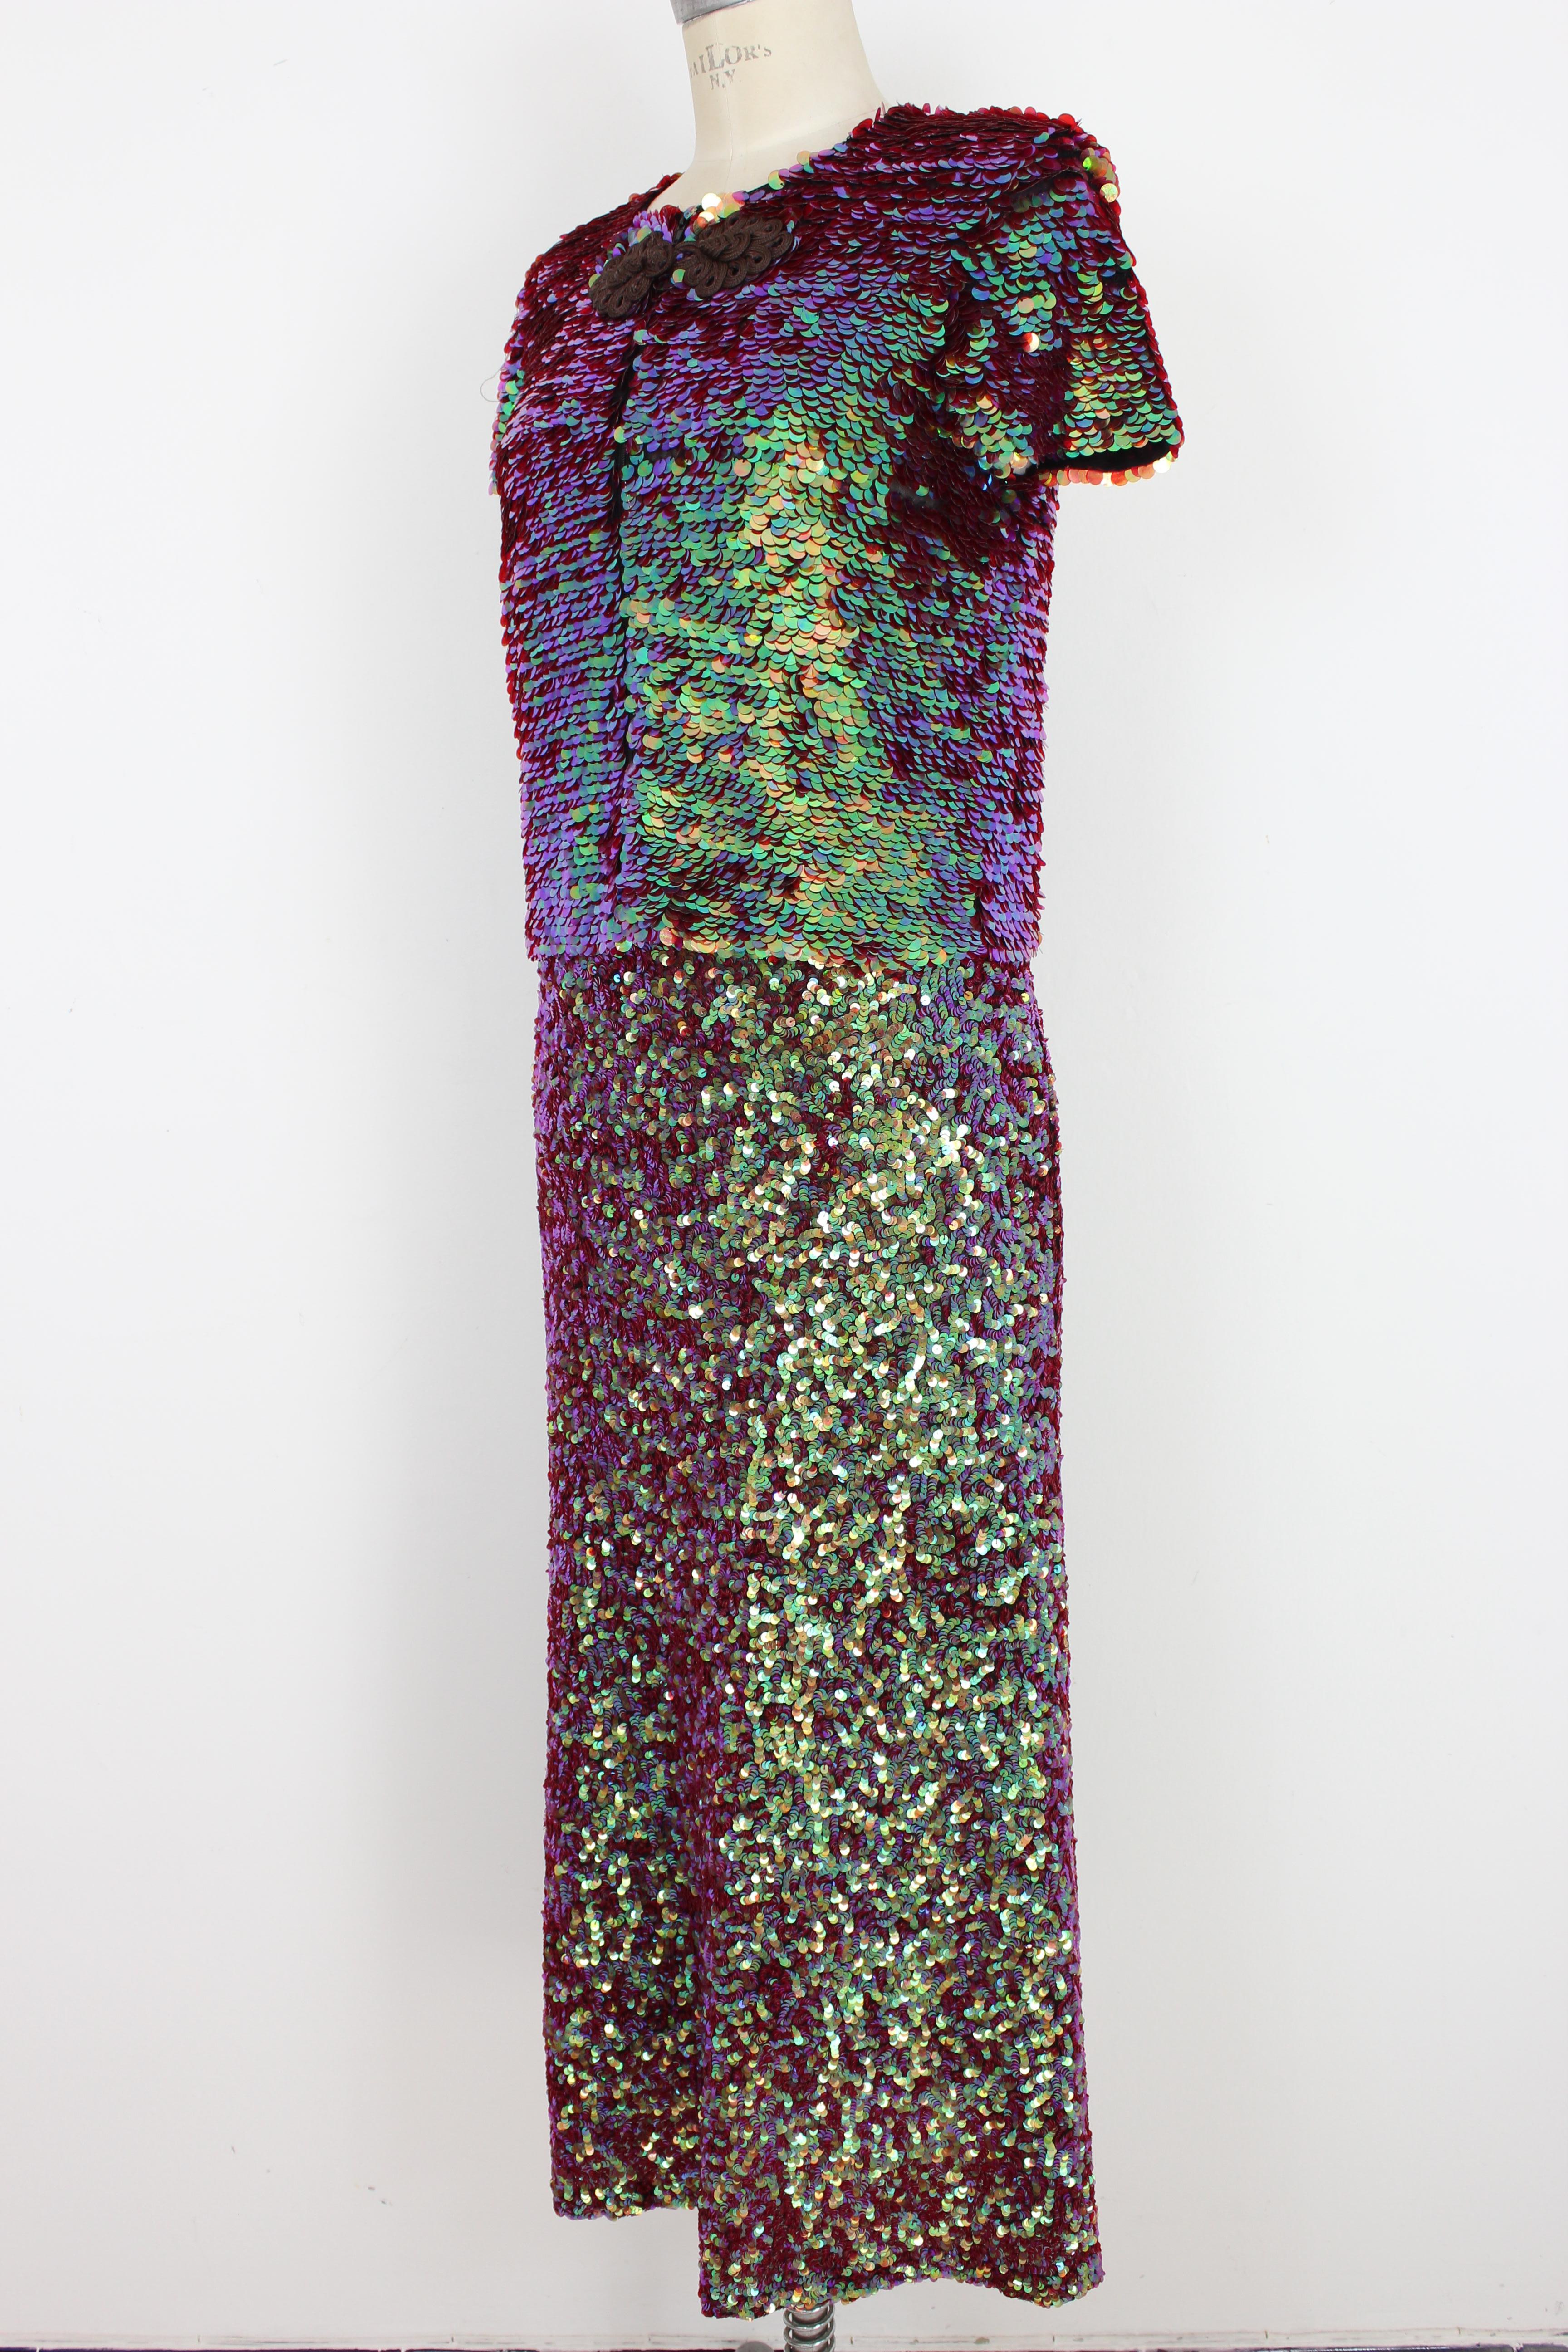 Jean Paul Gaultier Sequins Iridescent Multicolor Skirt Suit Cocktail Dress 1990s 2